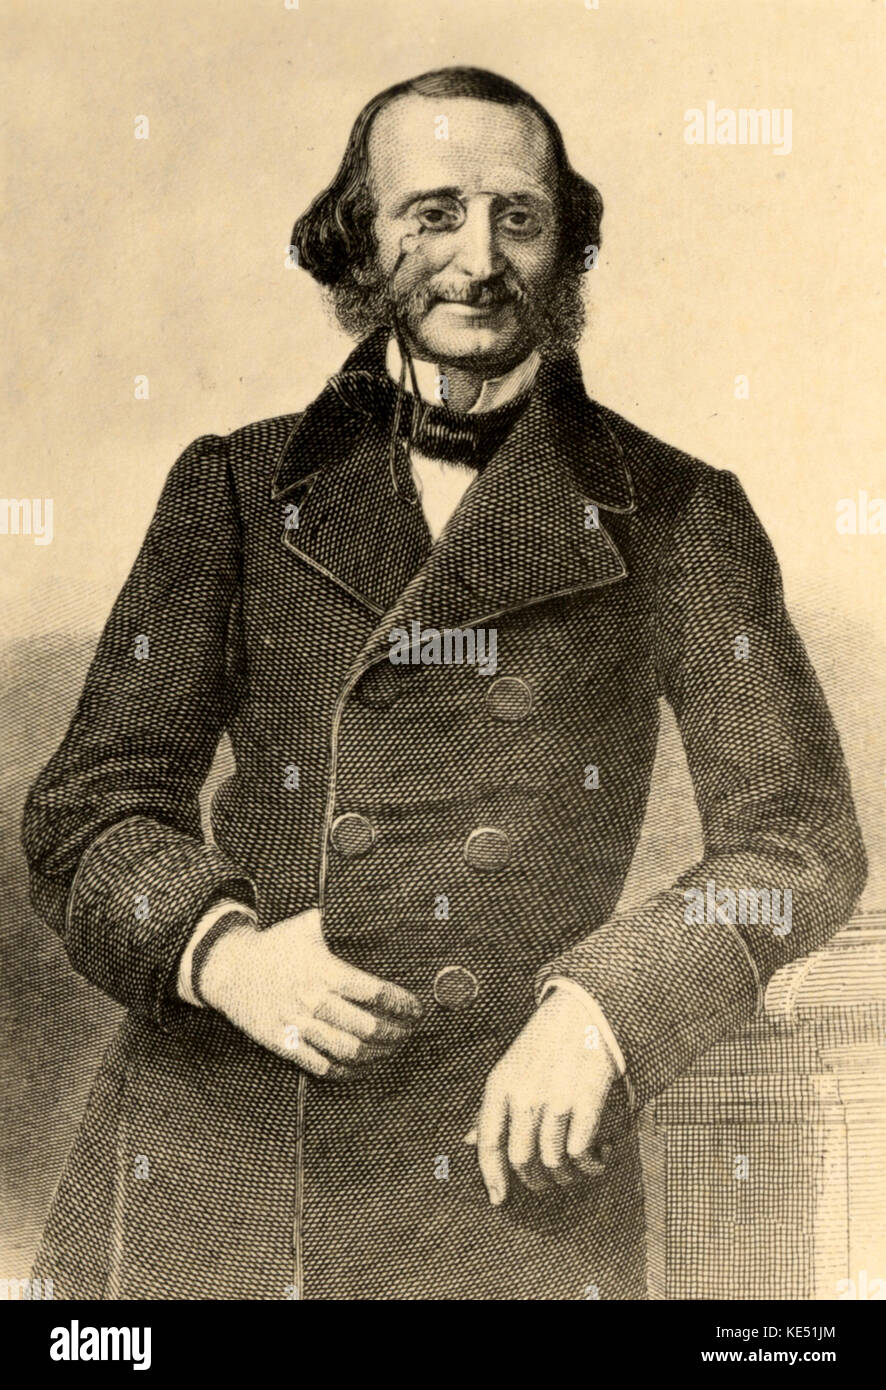 OFFENBACH, Jacques - Ritratto tedesco/compositore francese (1819-1880) Foto Stock